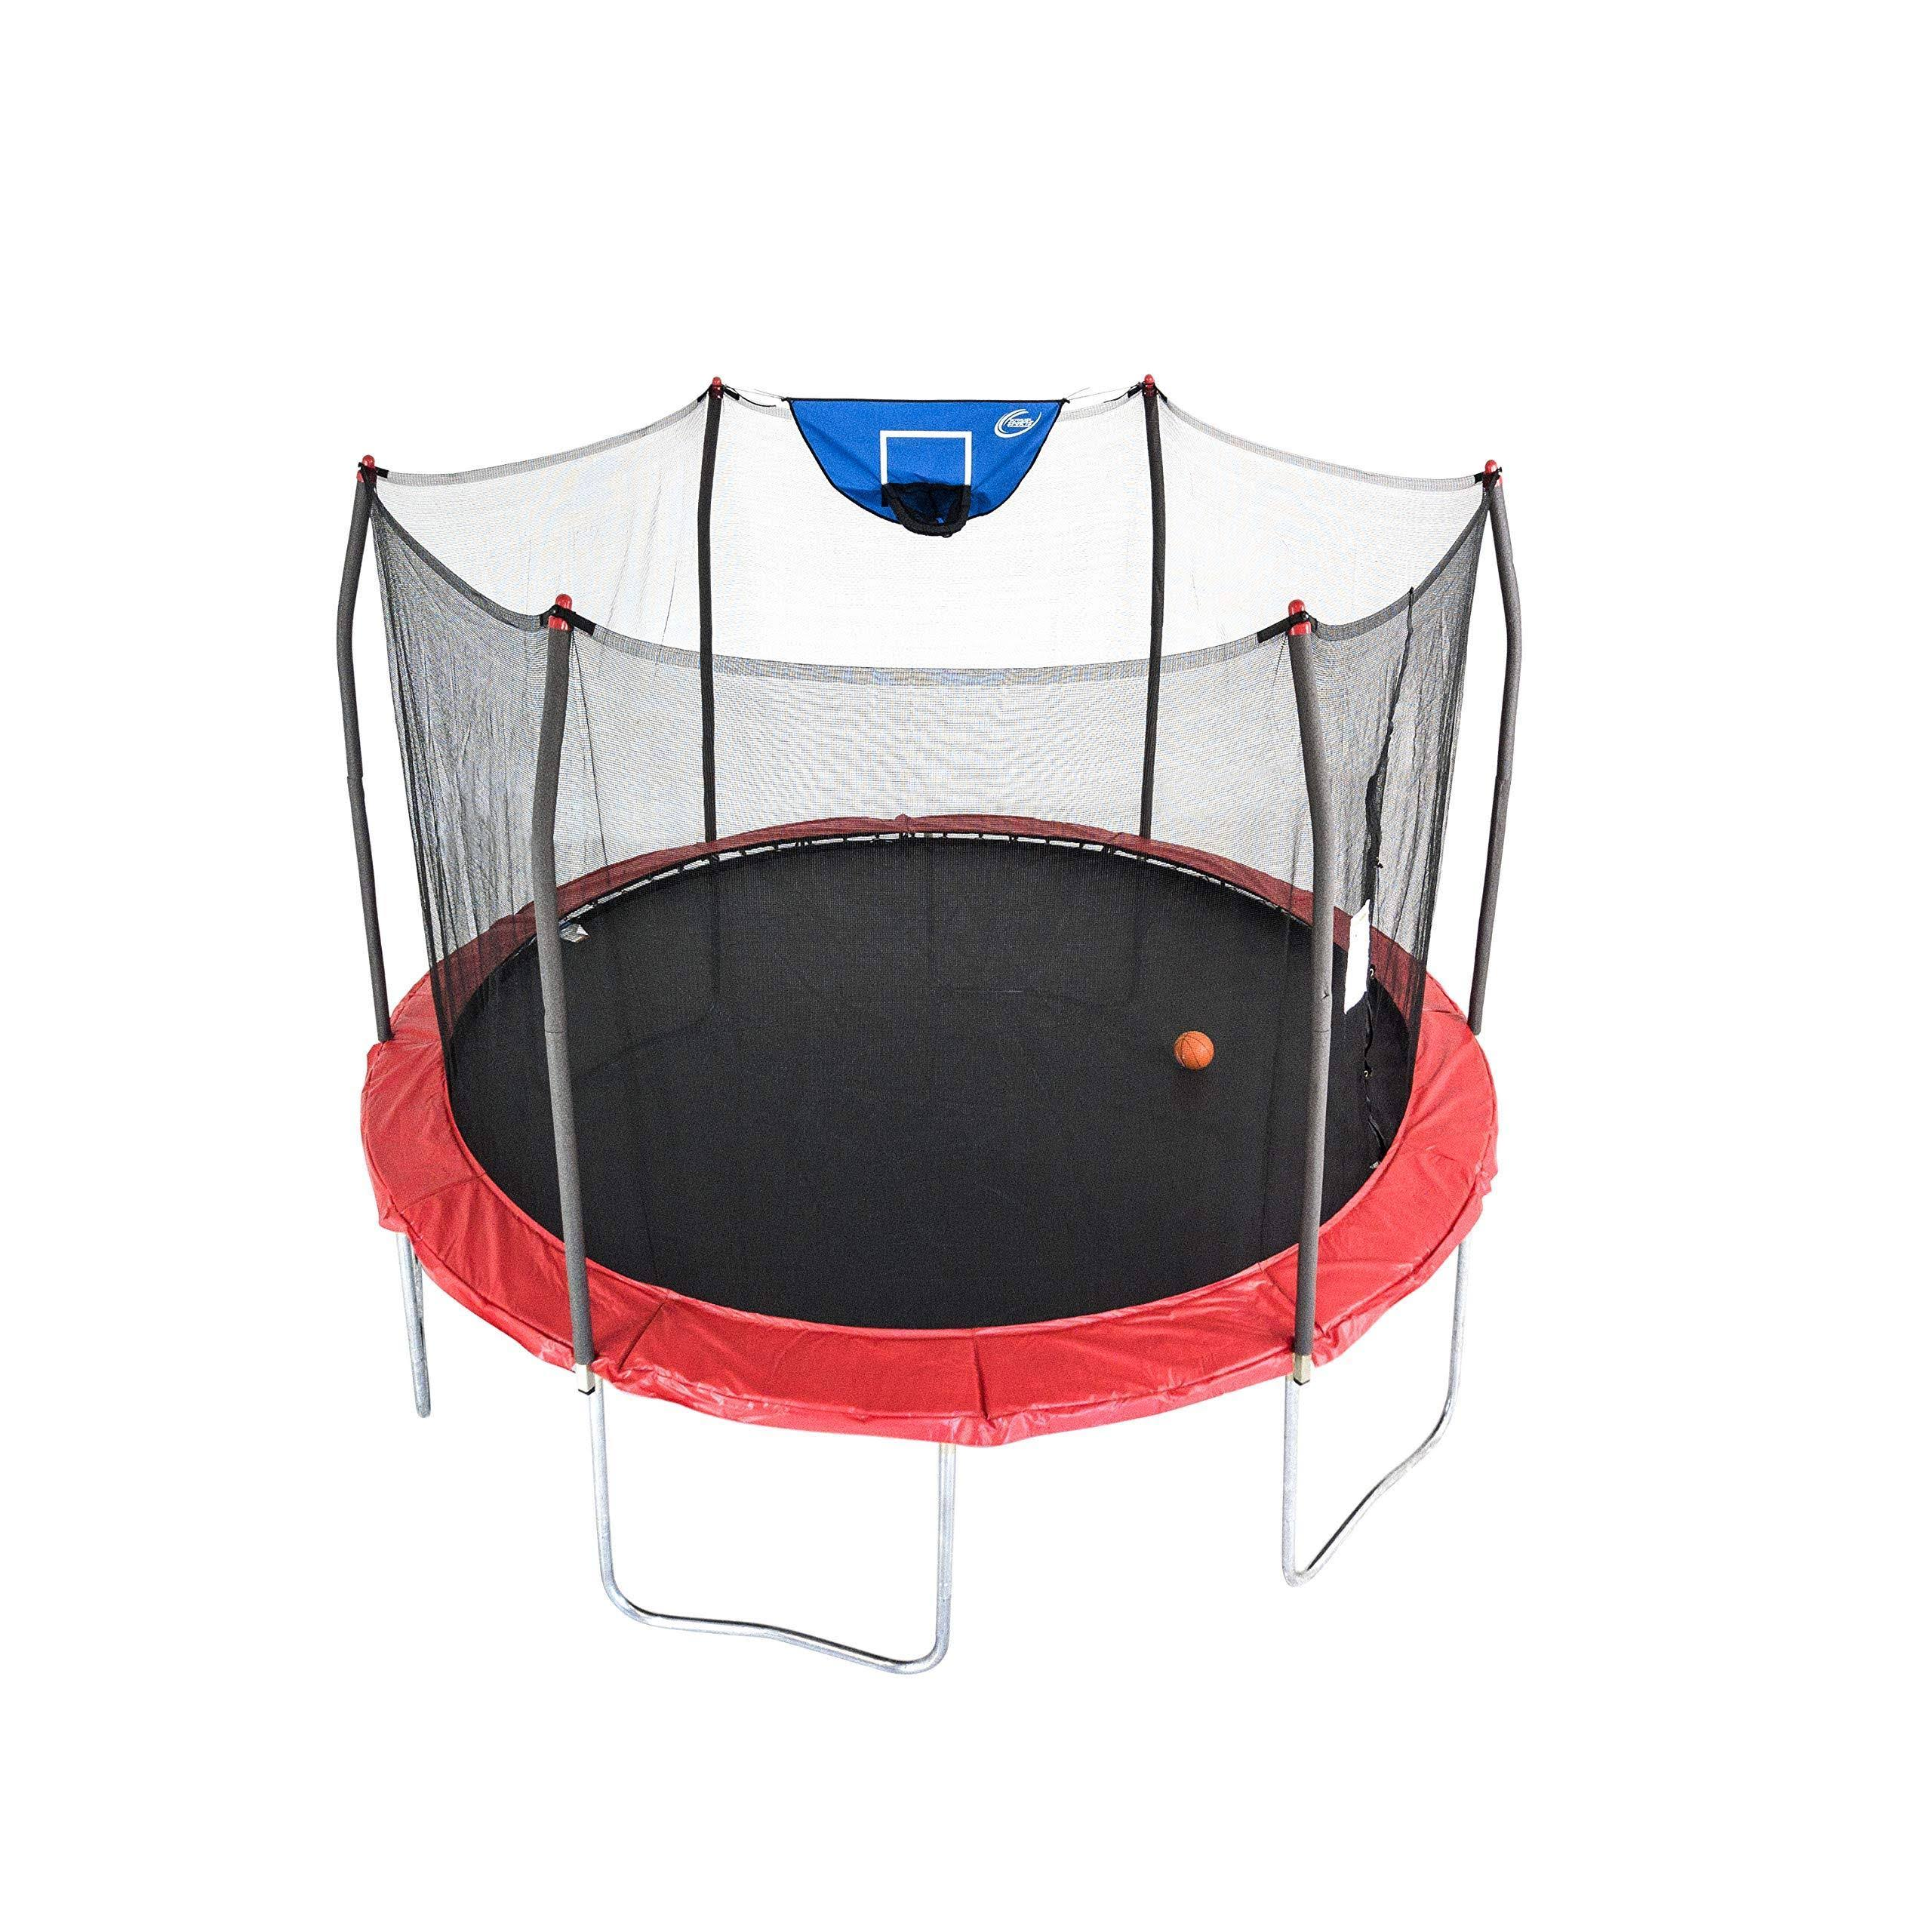 Skywalker Trampolines 12-Foot Jump N’ Dunk Trampoline with Enclosure Net Basketball Trampoline